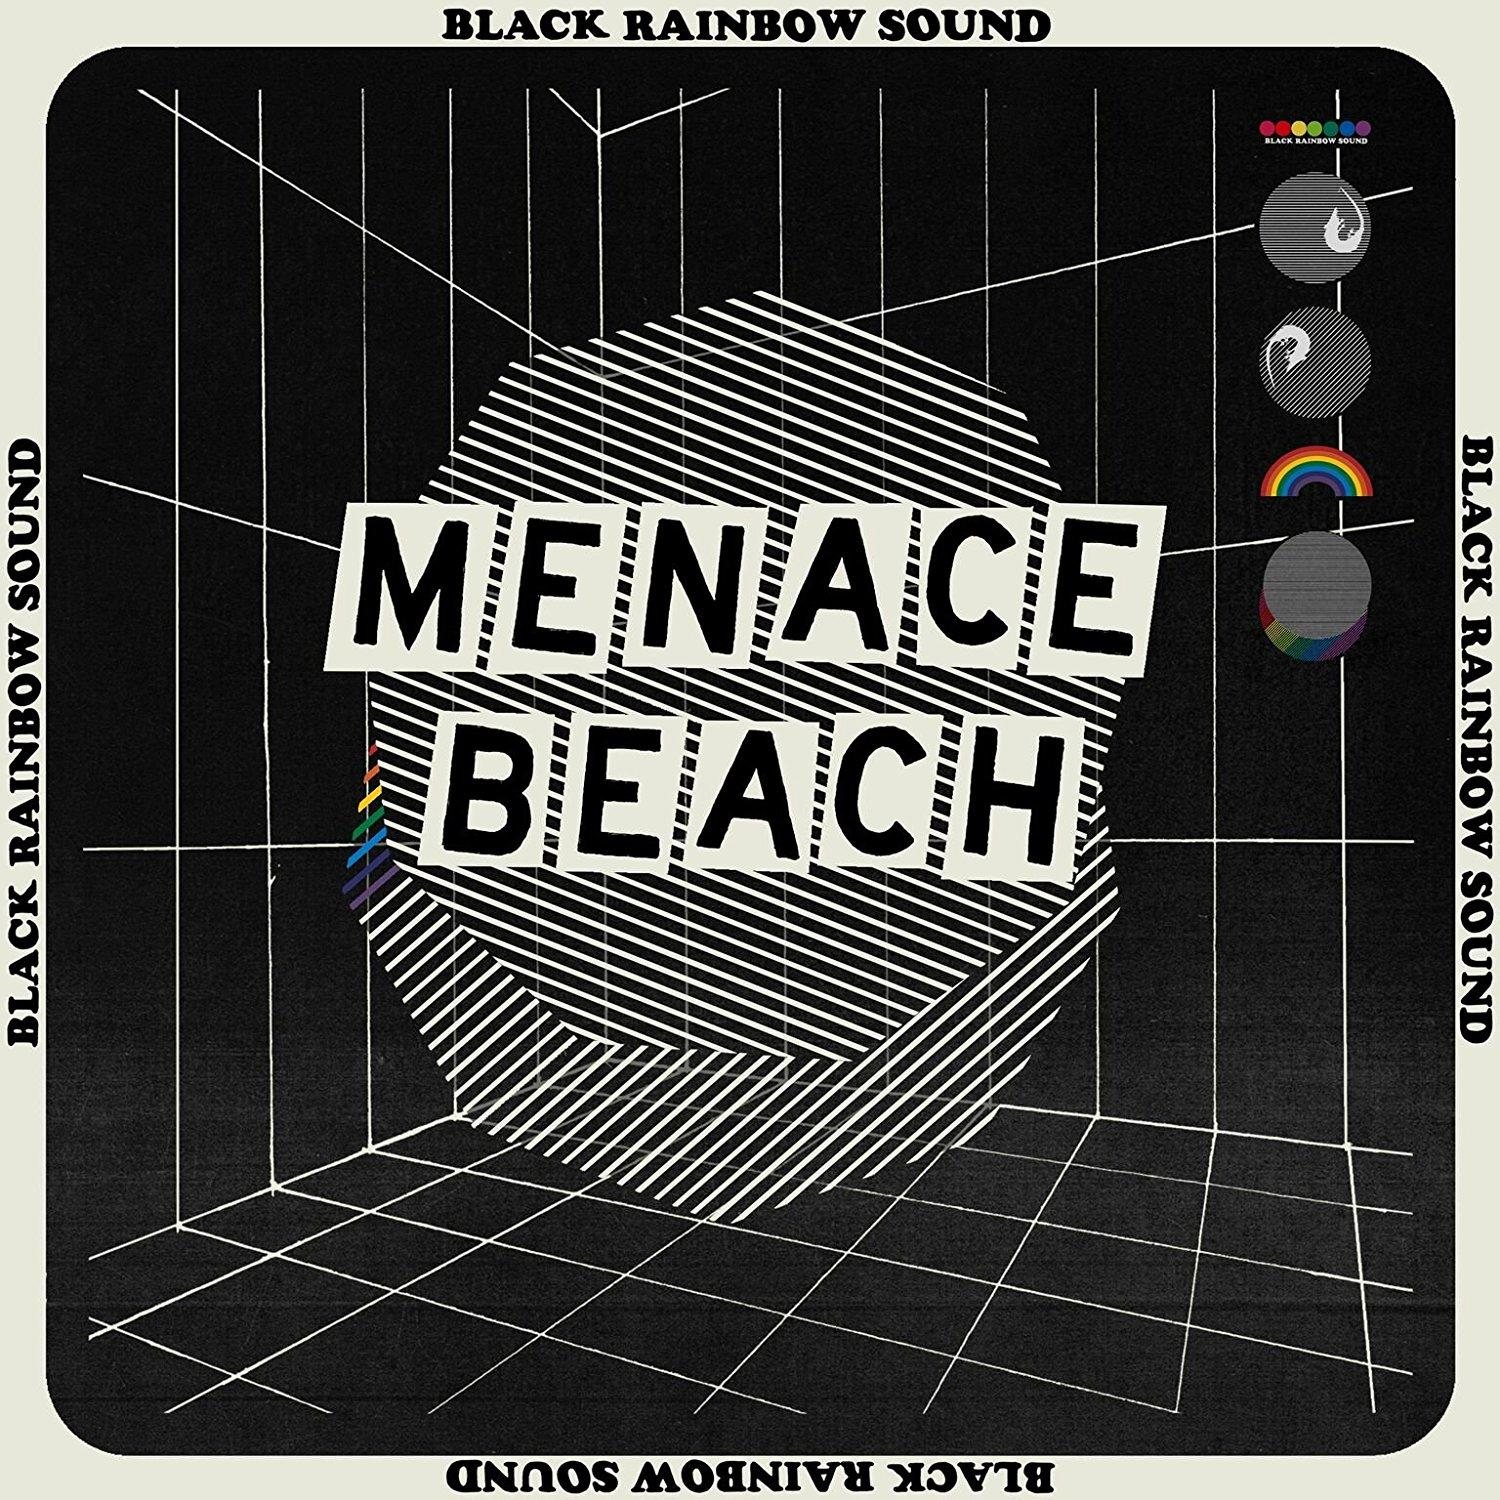 - (CD) Black Beach - Menace Sound Rainbow